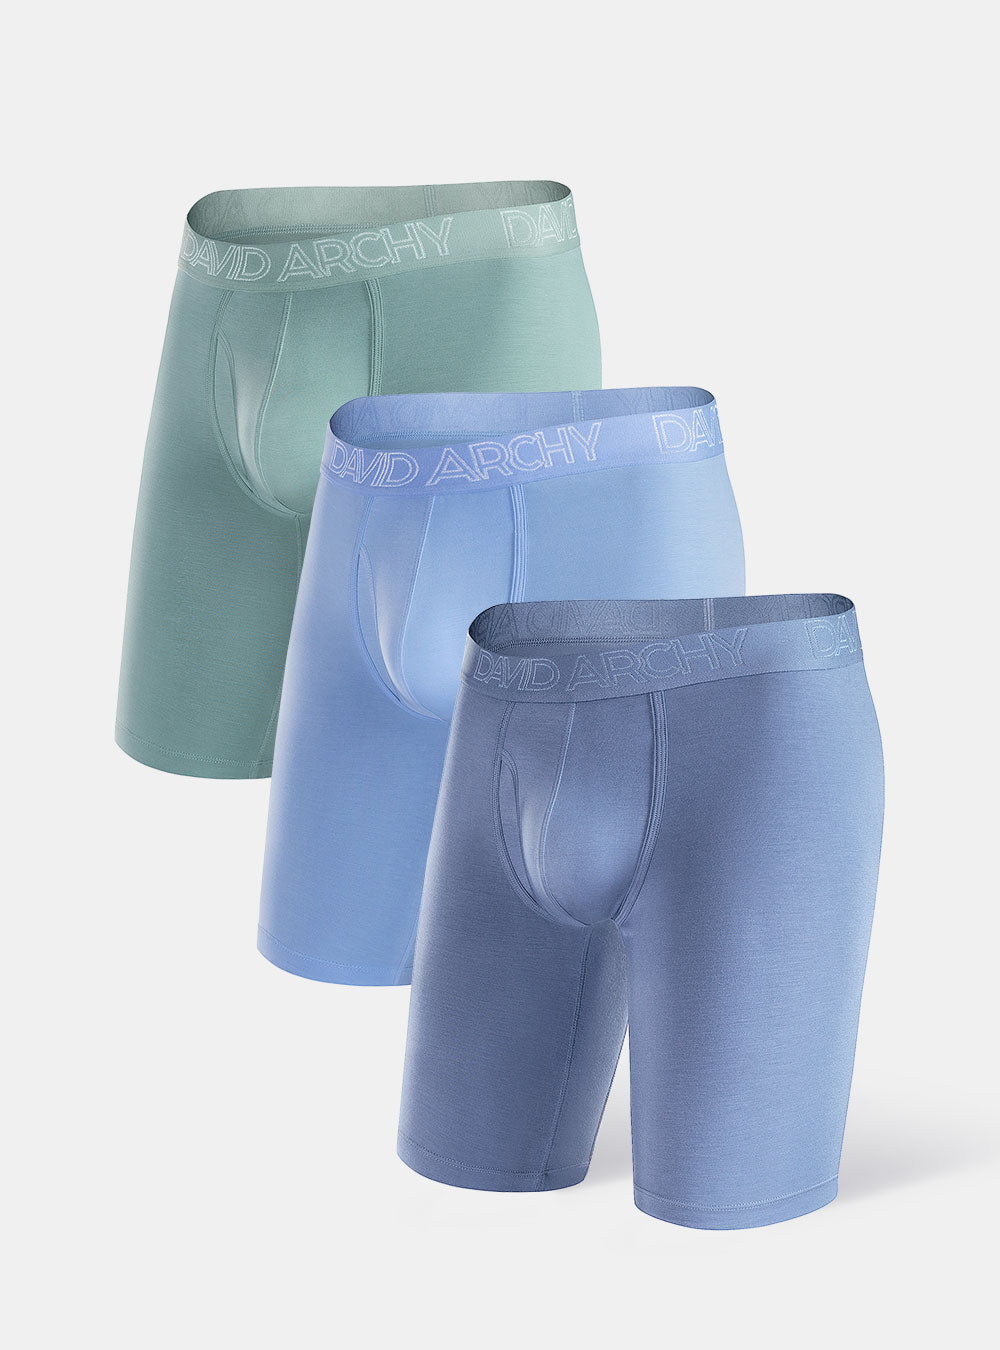 Boxer Briefs Sky Blue - Men's Underwear with Pouch